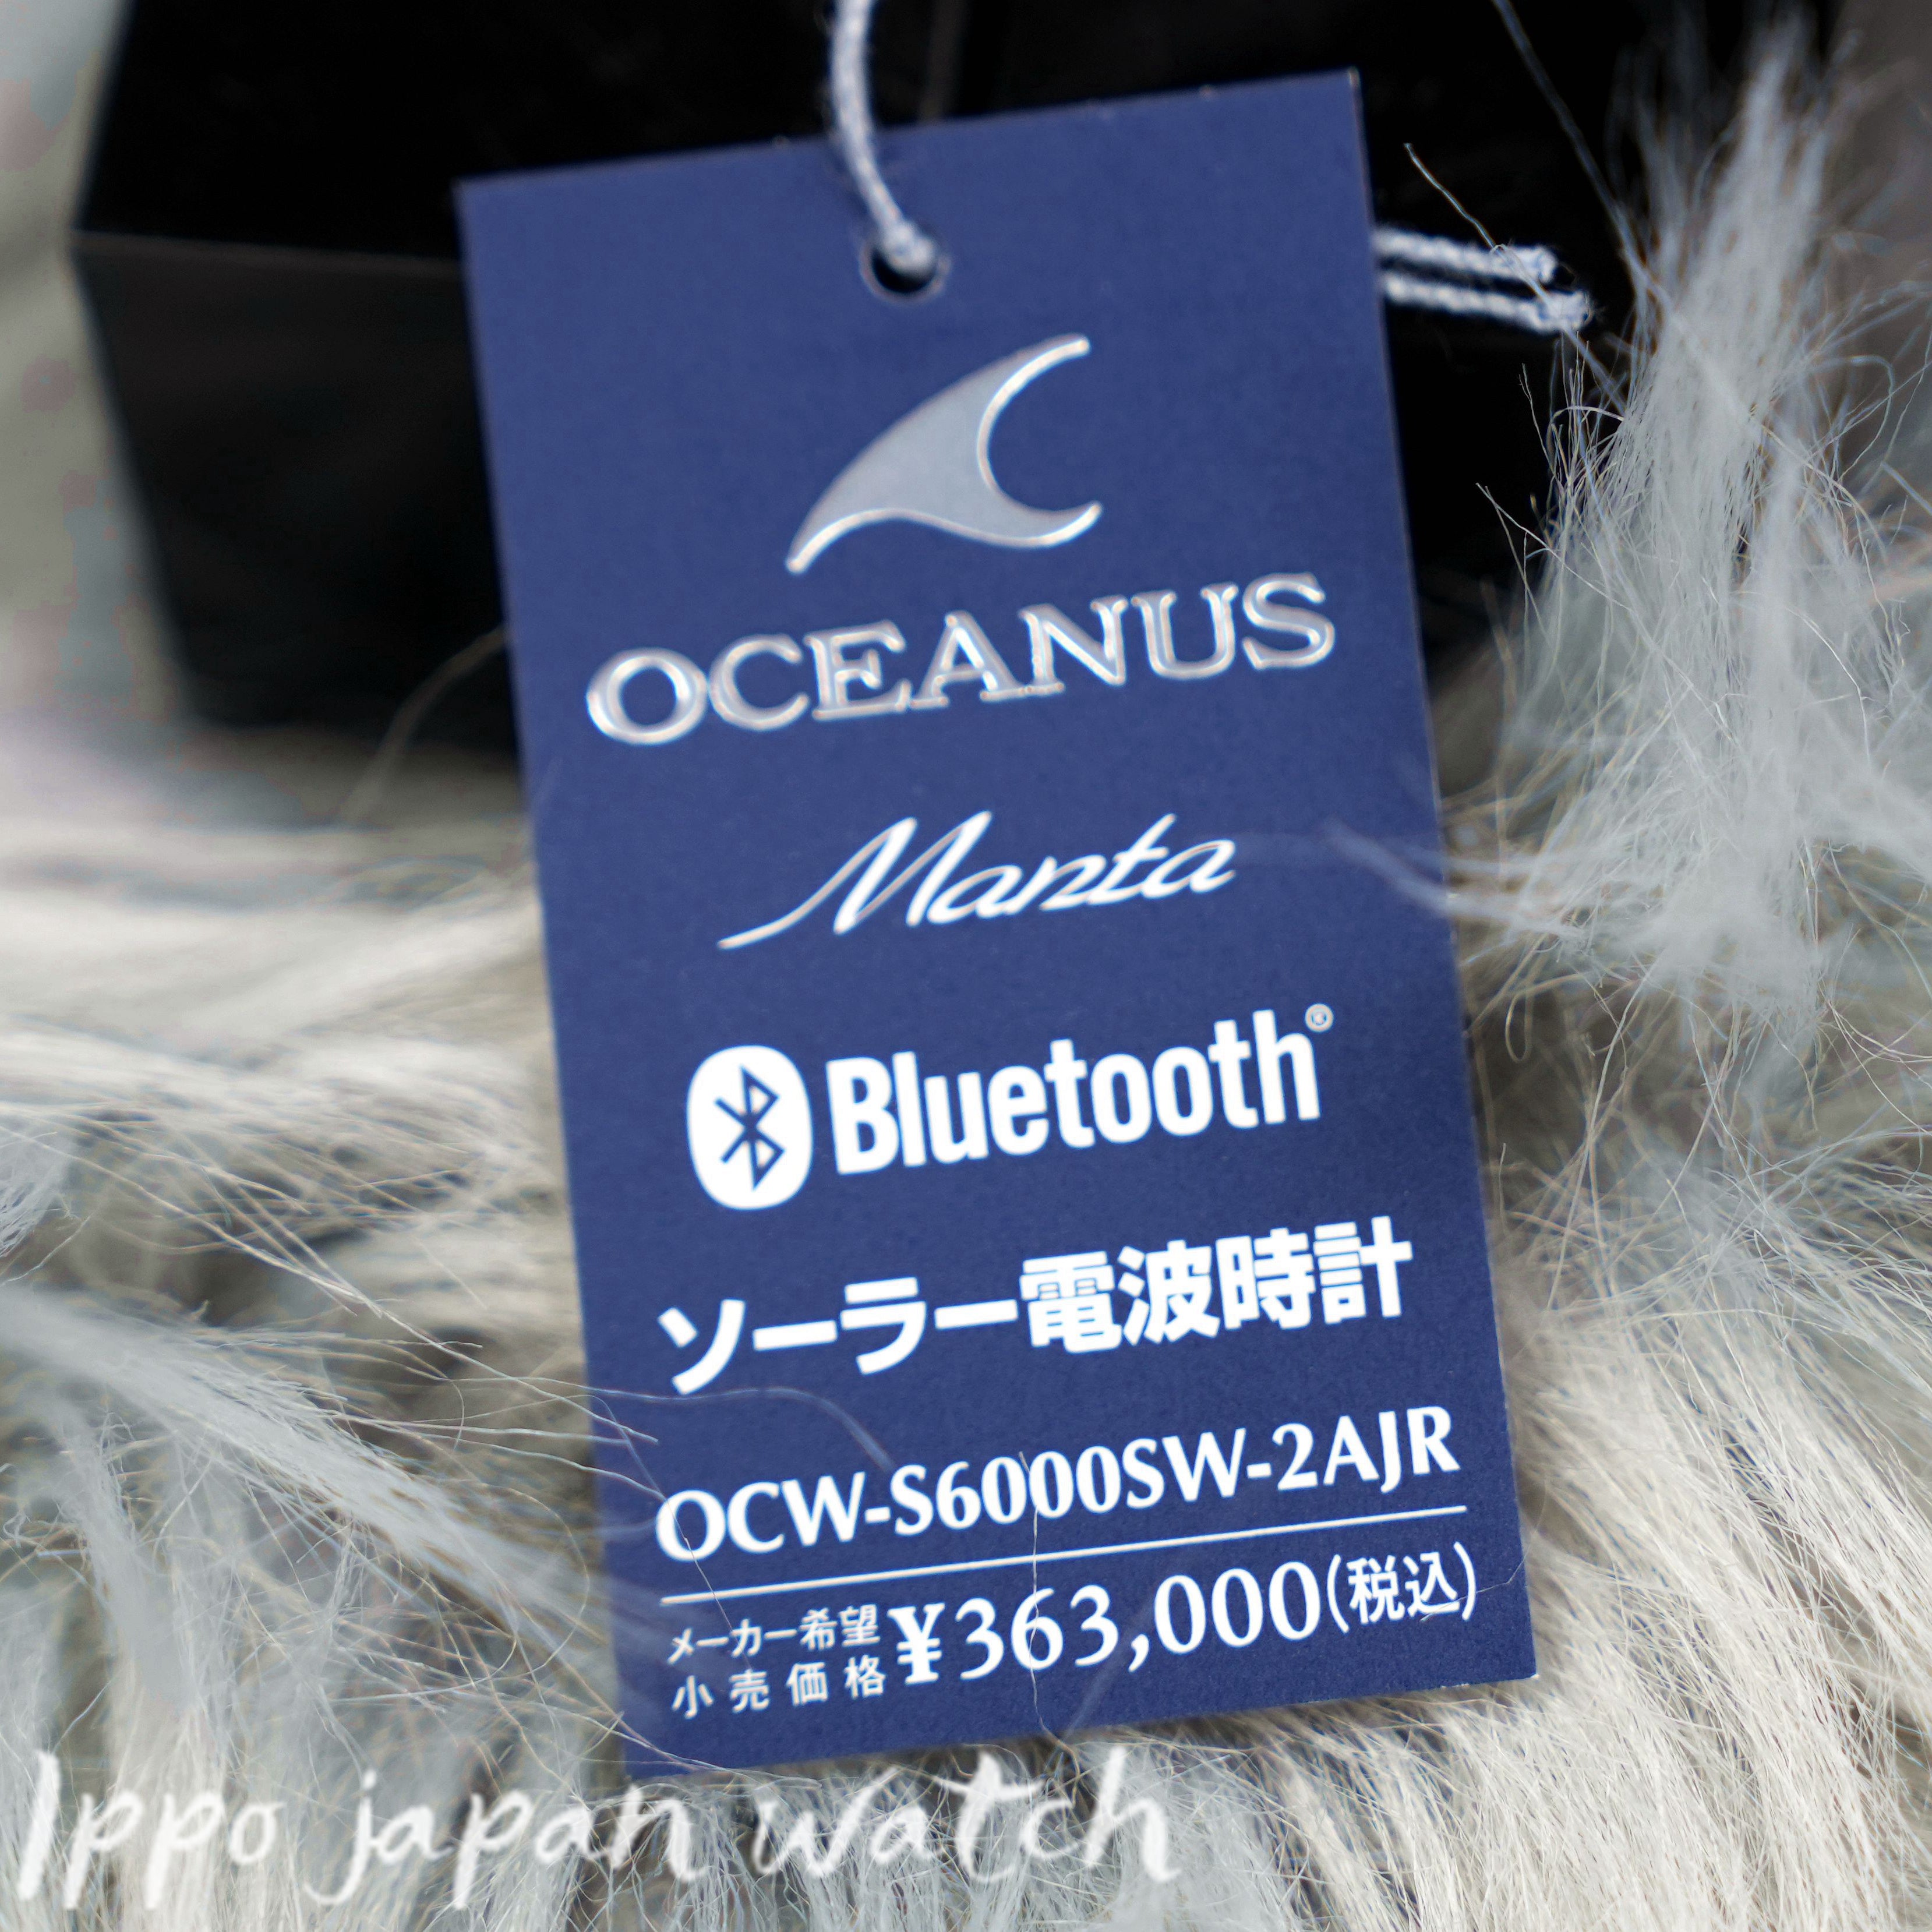 Casio Oceanus Manta S6000 Series Limited edition men's watch OCW-S6000SW-2AJR  2023.6 - IPPO JAPAN WATCH 